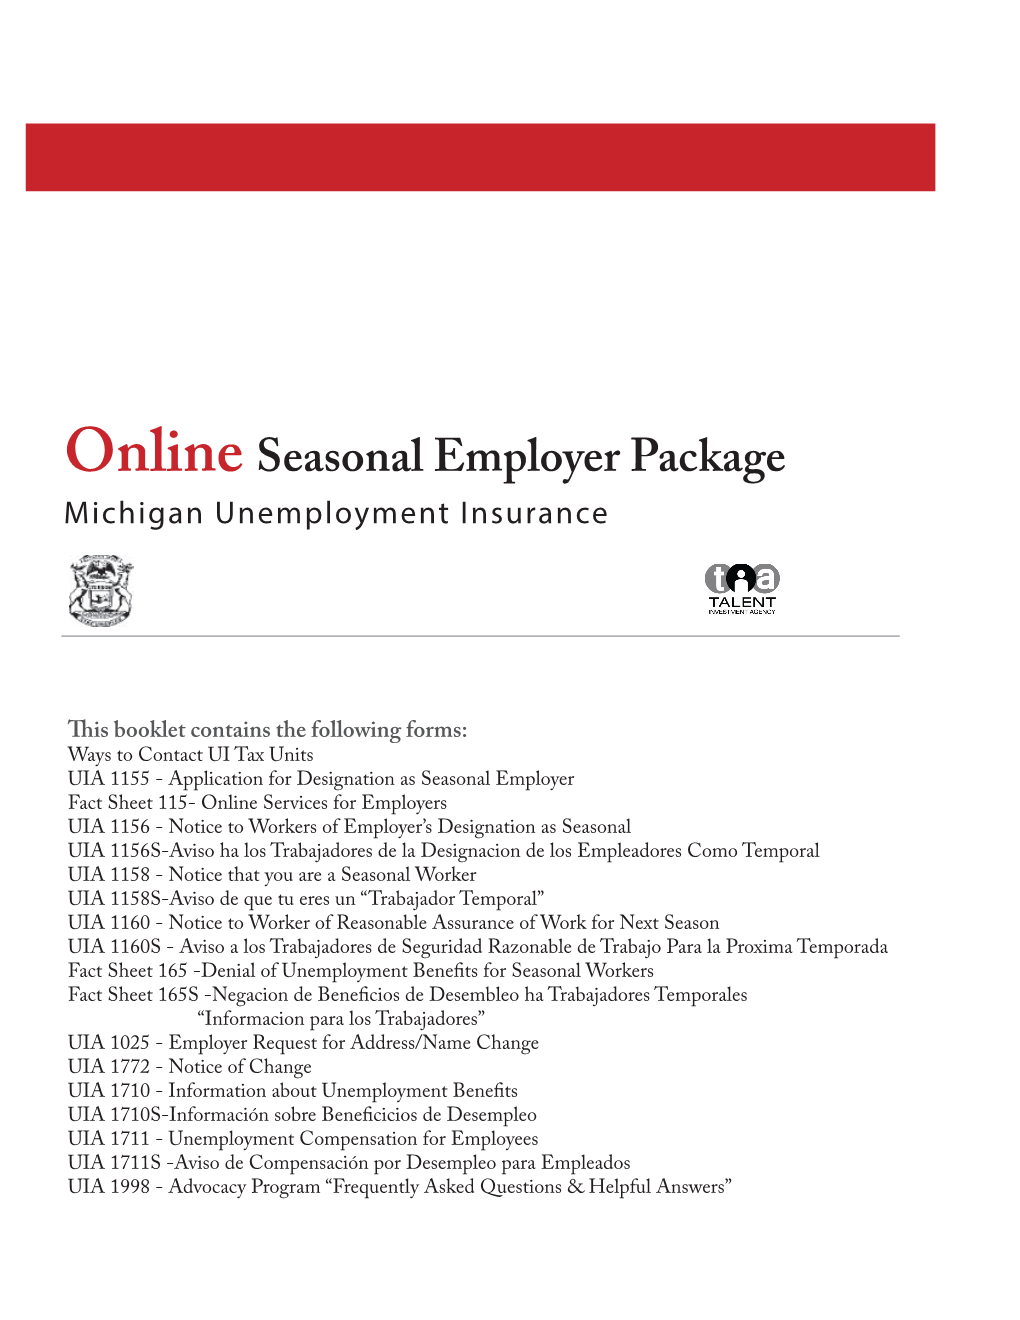 Online Seasonal Employer Package Michigan Unemployment Insurance